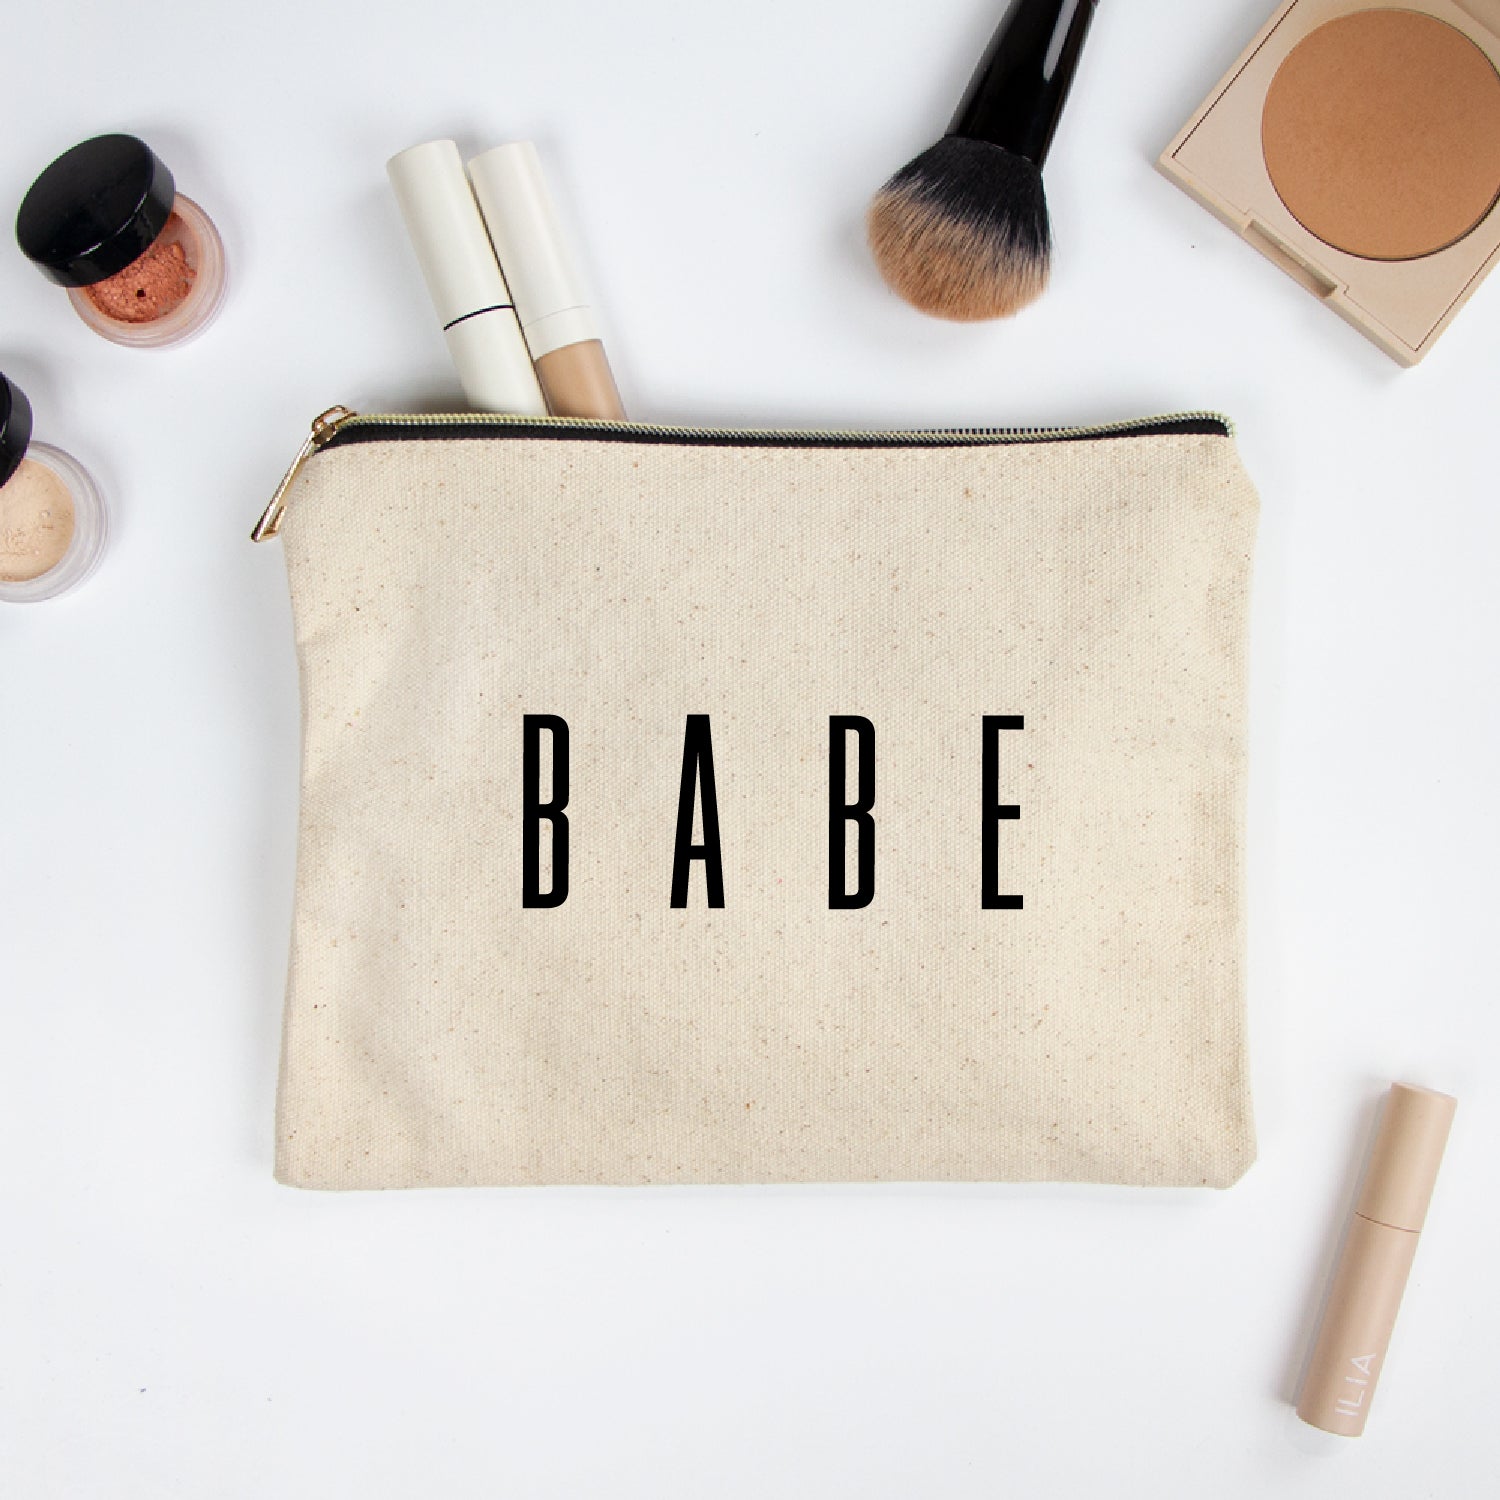 Babe Makeup Bag Gifts